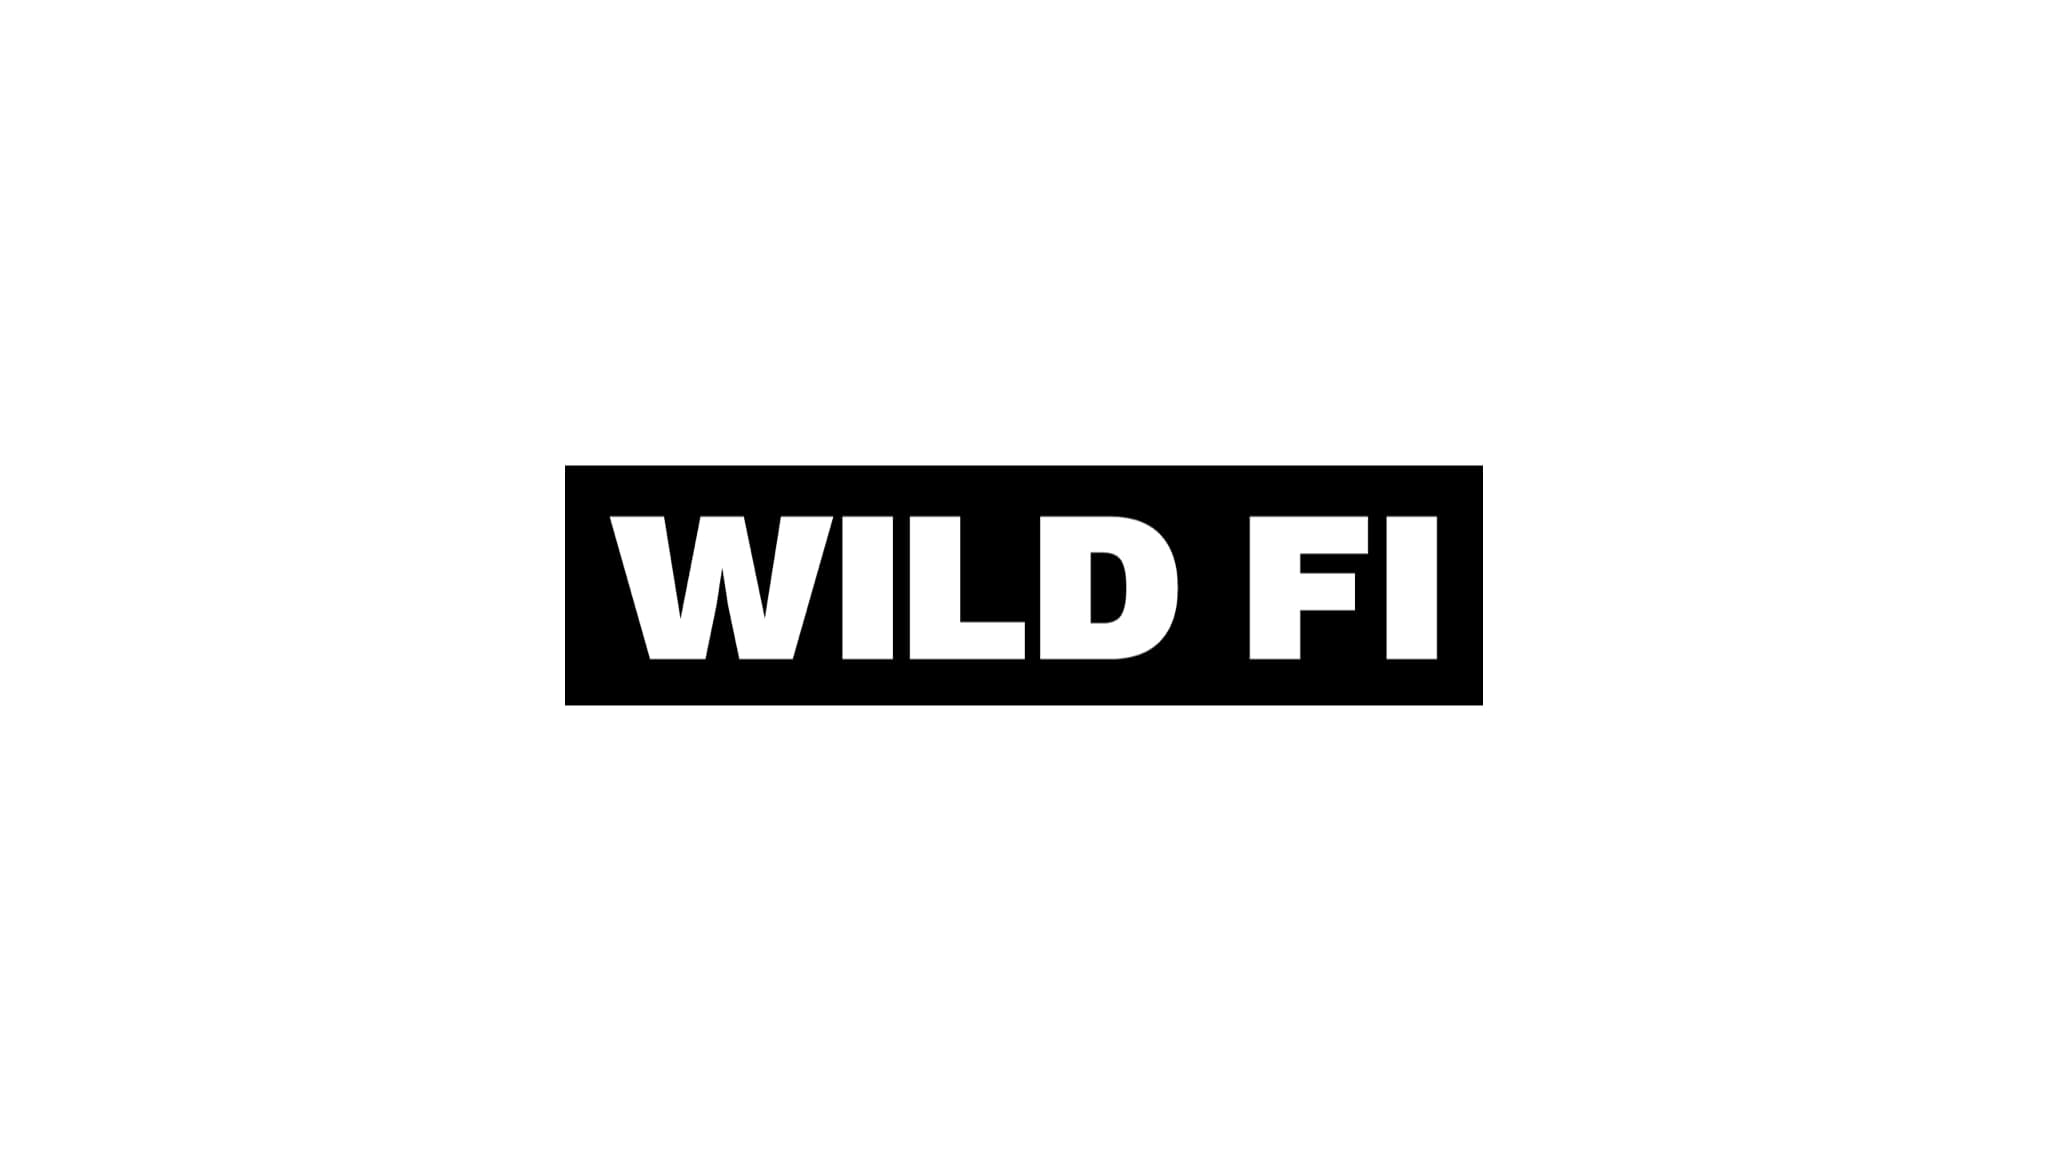 (c) Wildfi.com